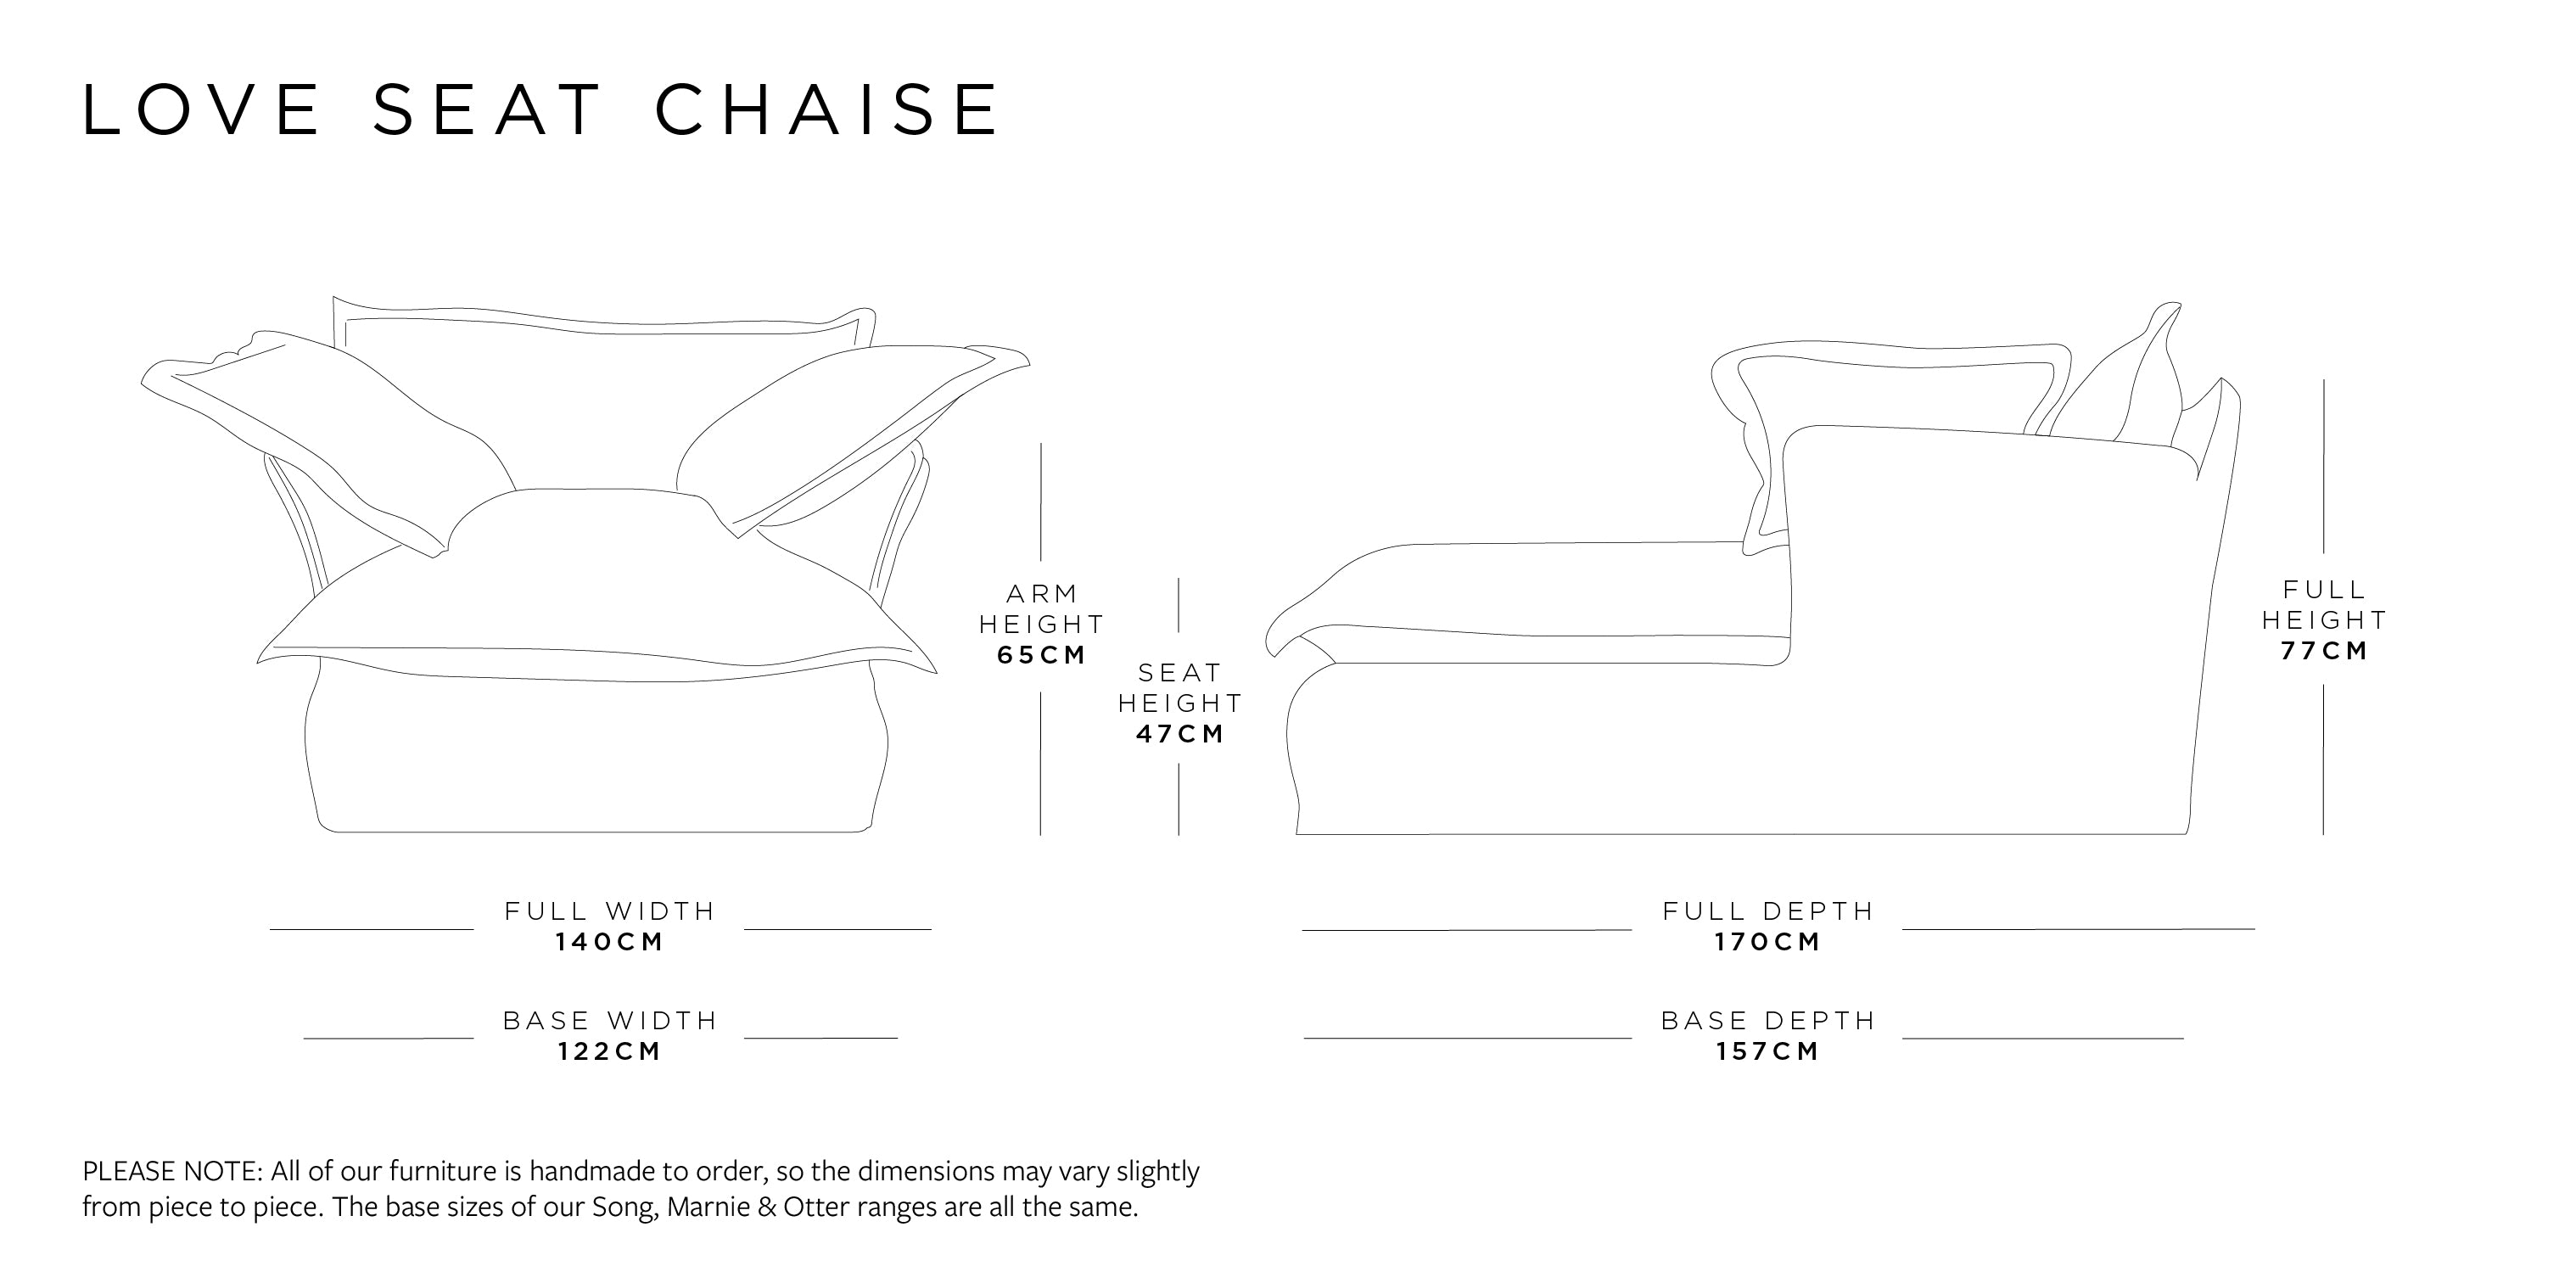 Loveseat Sofa Chaise | Otter Range Size Guide